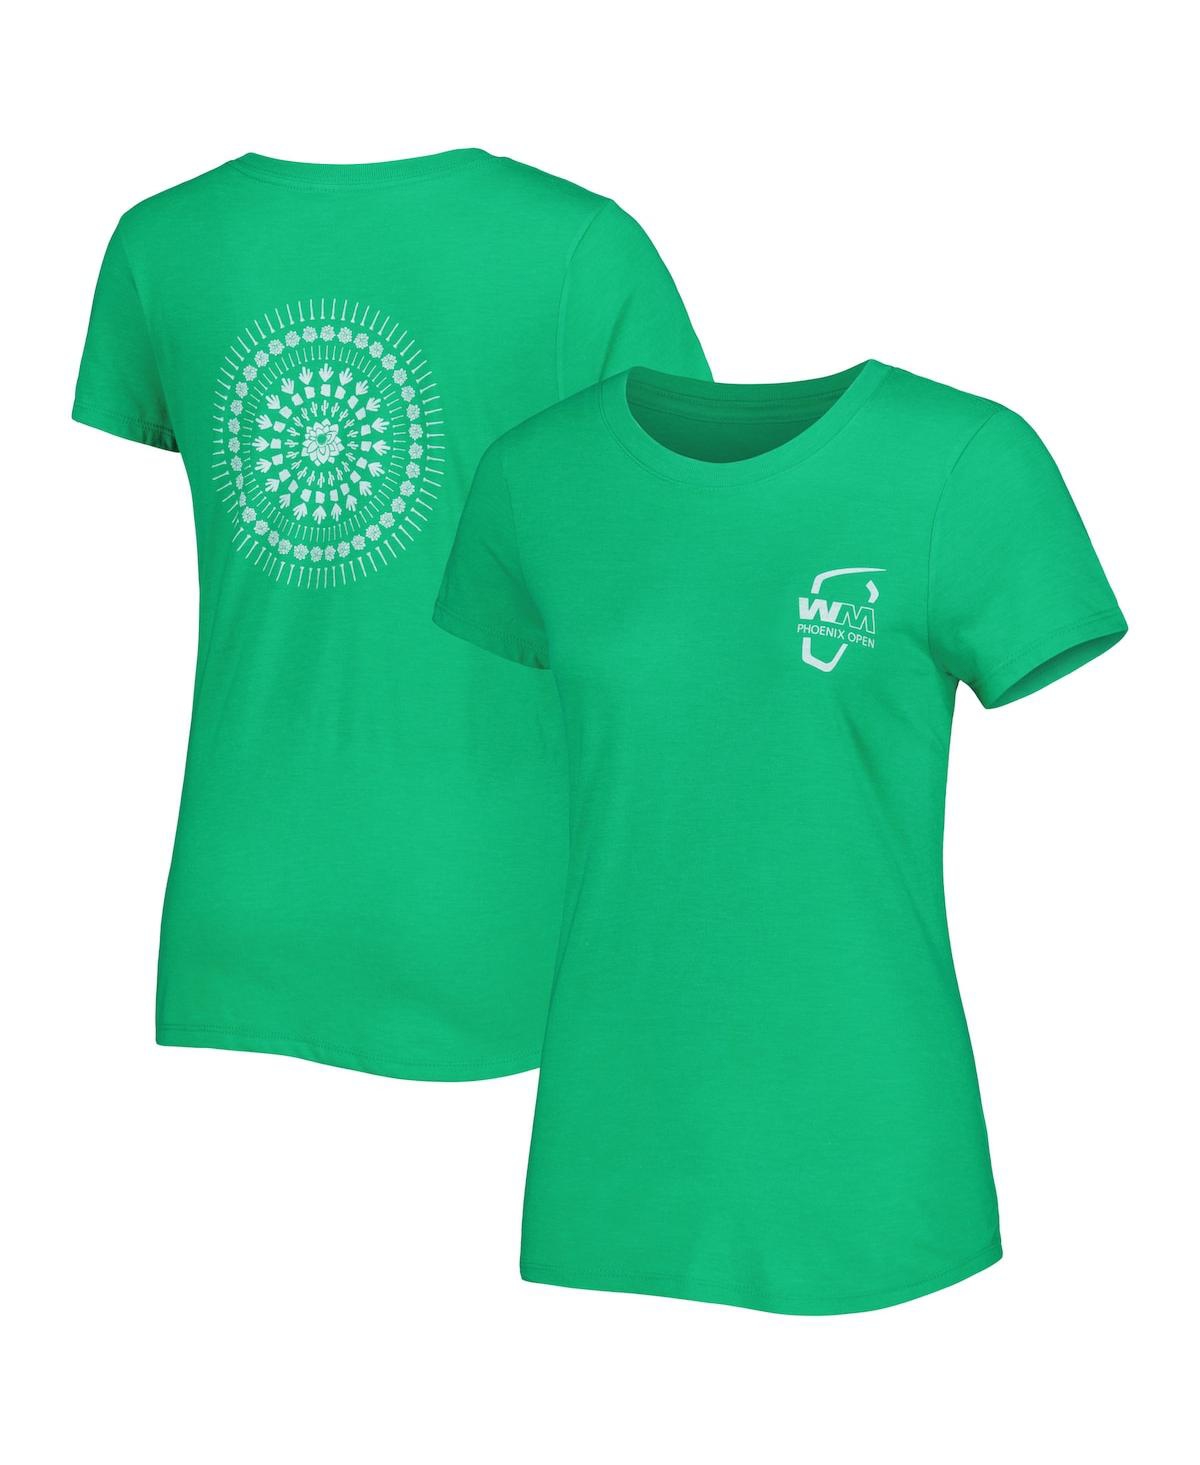 Women's Ahead Green Wm Phoenix Open Danby Tri-Blend T-shirt - Green